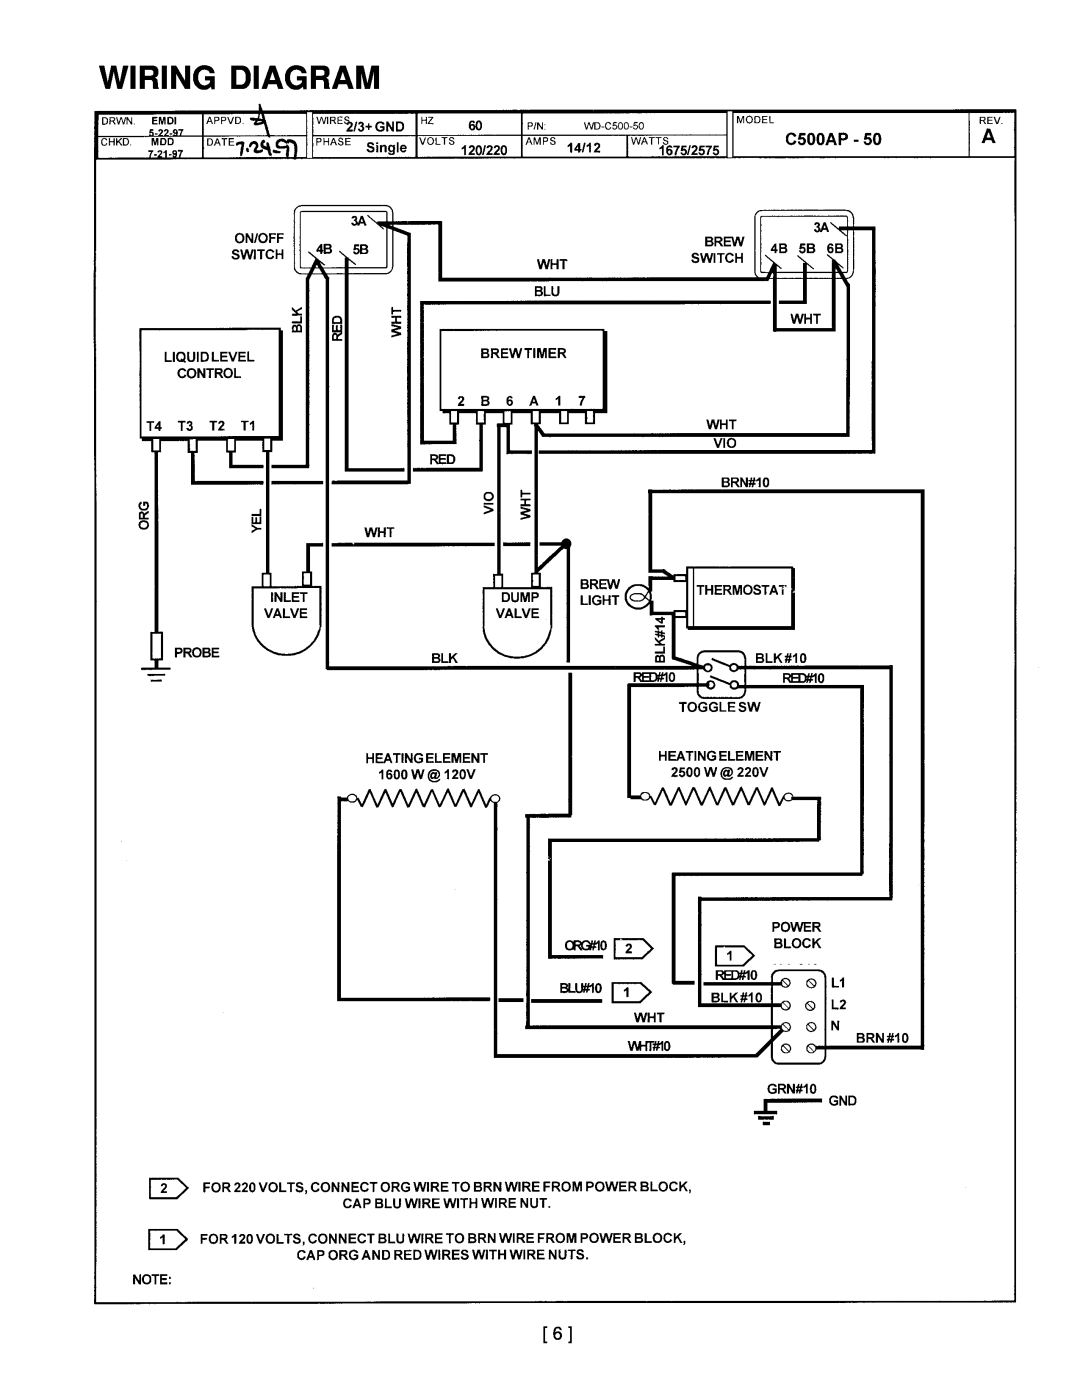 Wibur Curtis Company C500APT service manual Wiring Diagram 